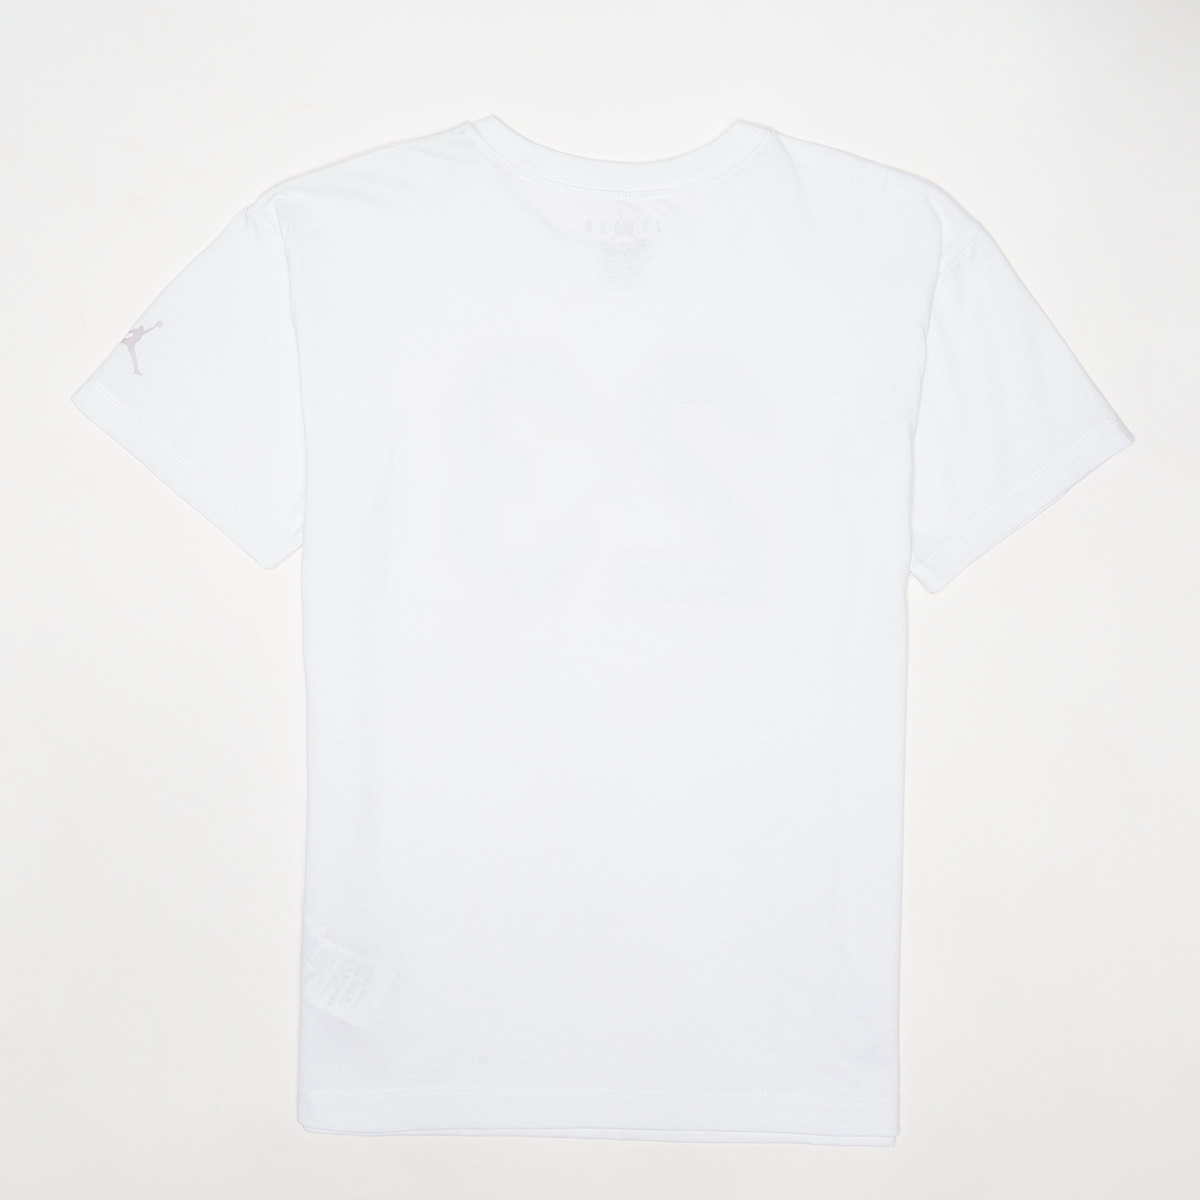 Jordan 23 Flight Short Sleeve Tee T-shirts Kids white maat: 128 beschikbare maaten:128 147 158 170